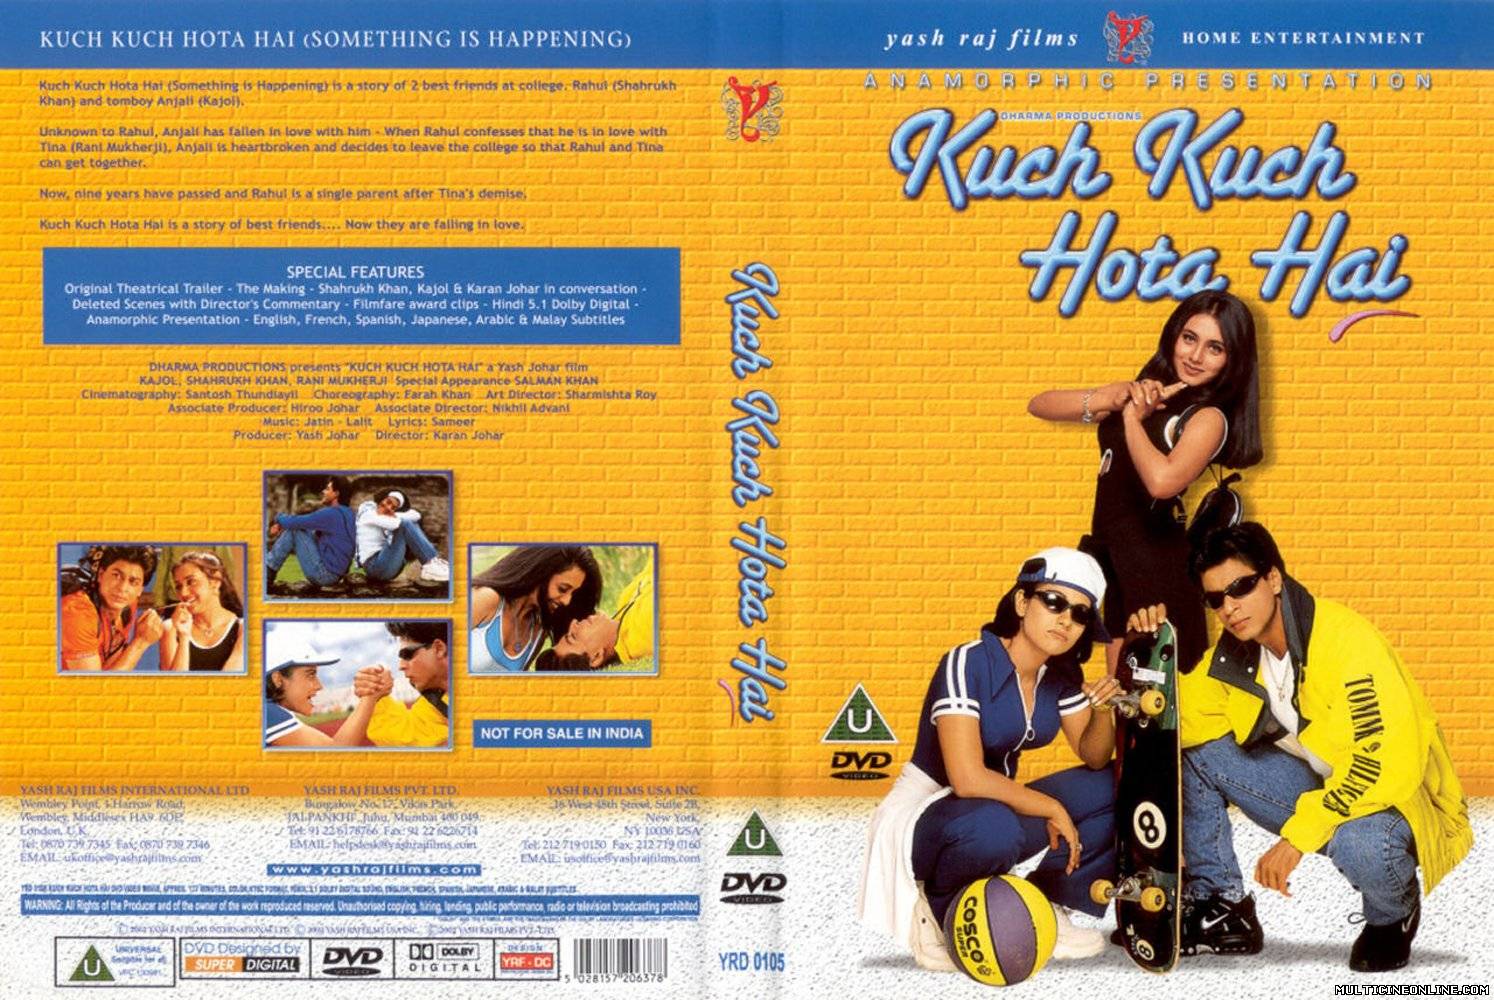 Ver Kuch Kuch Hota Hai (1998) Online Gratis